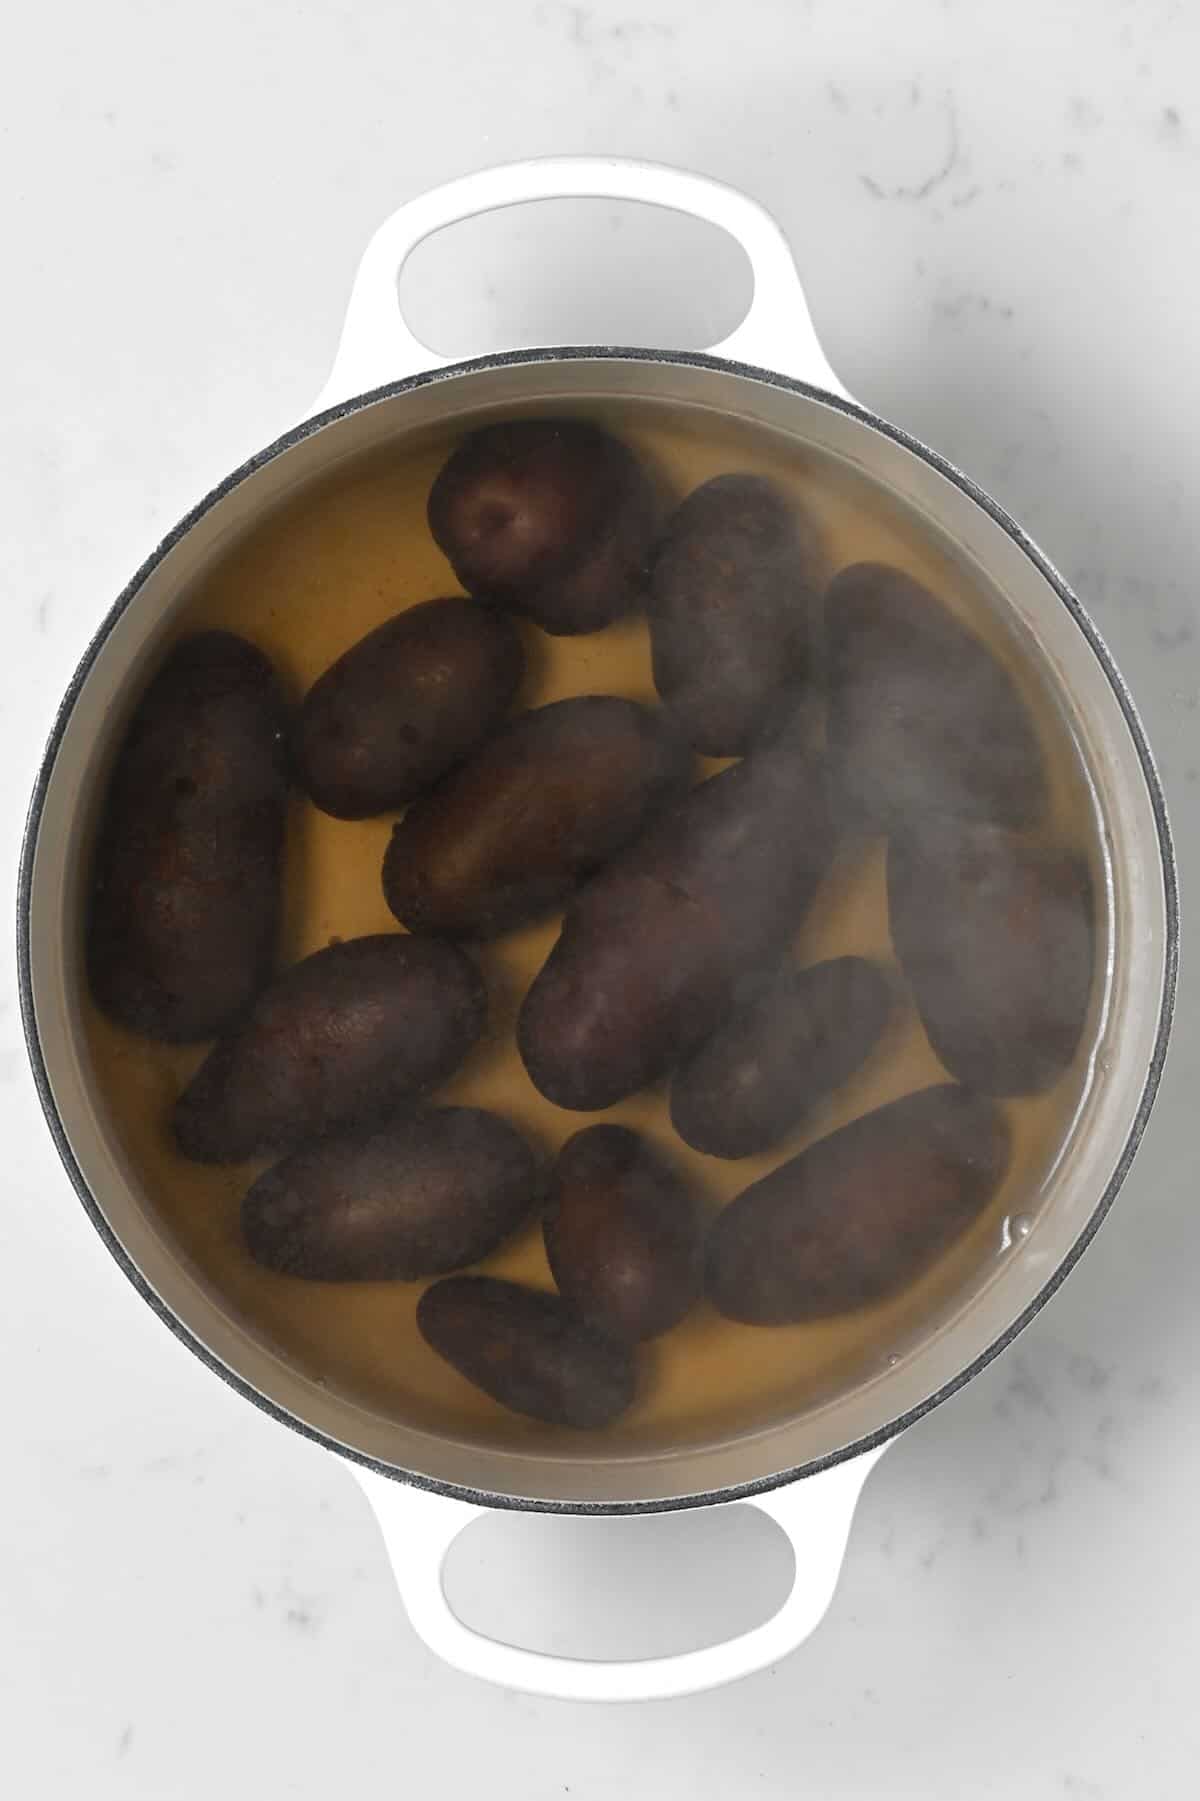 Boiled purple potatoes in a pot